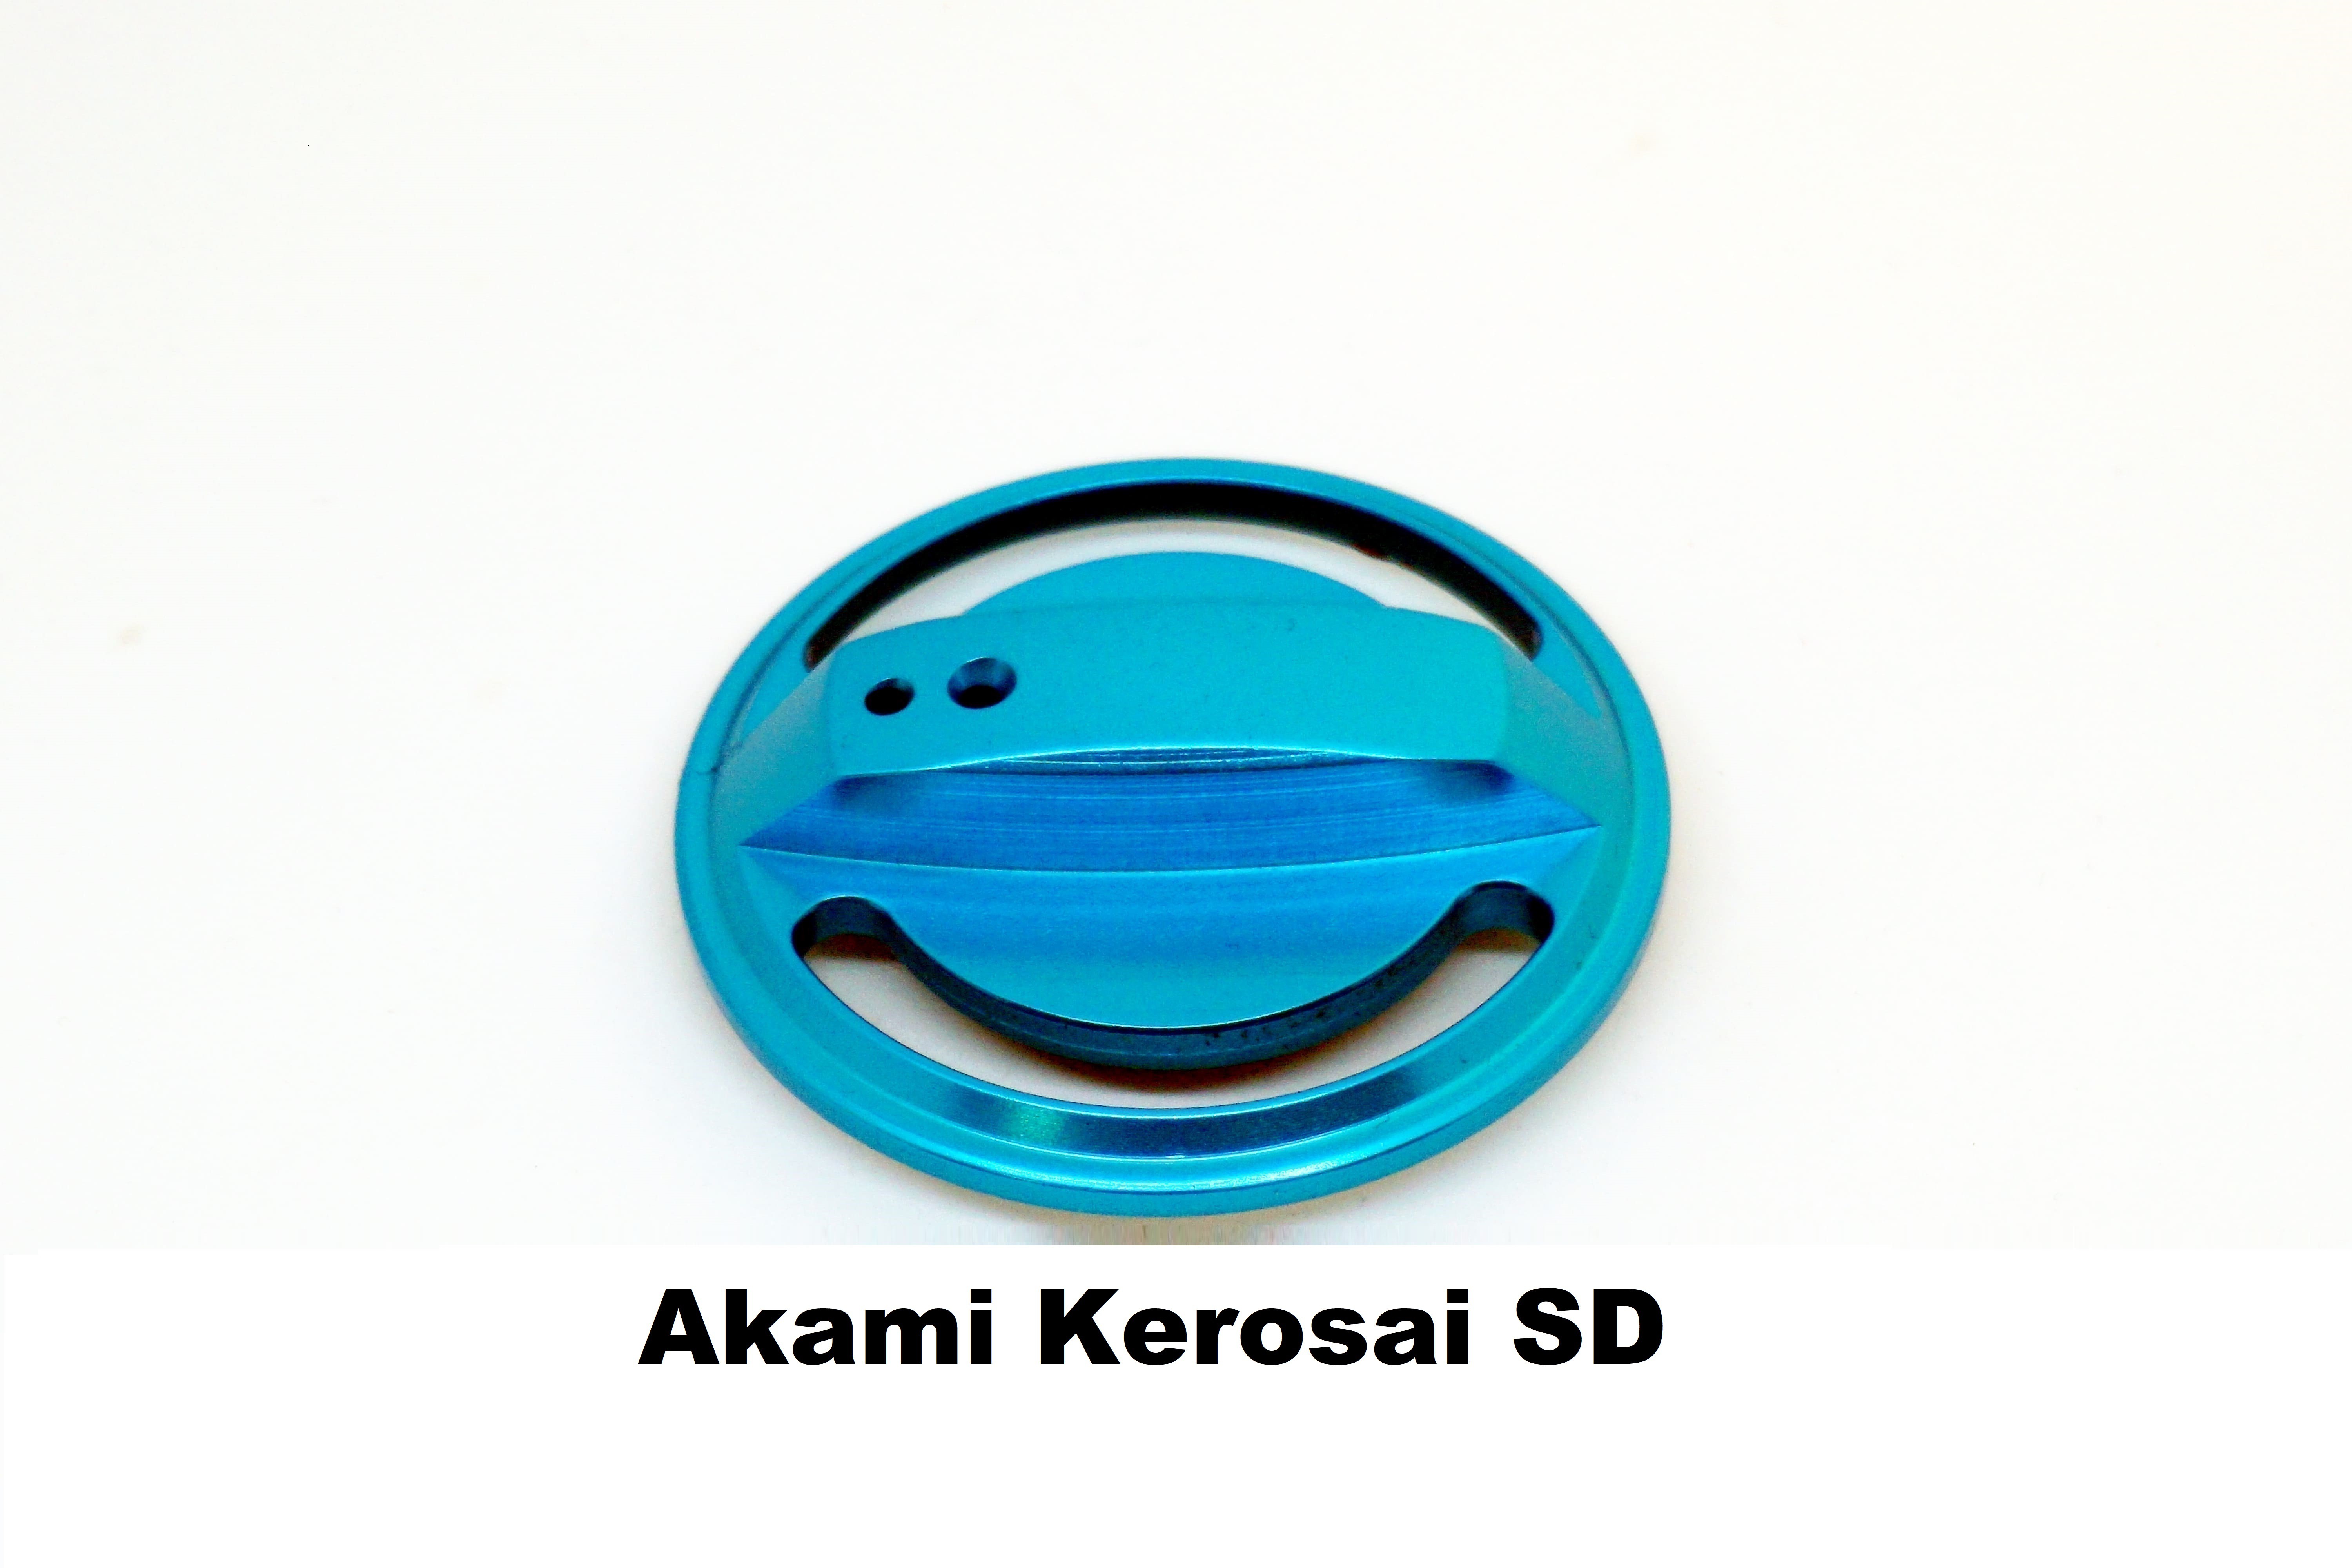 Drag Knob for Akami Kerosai SD